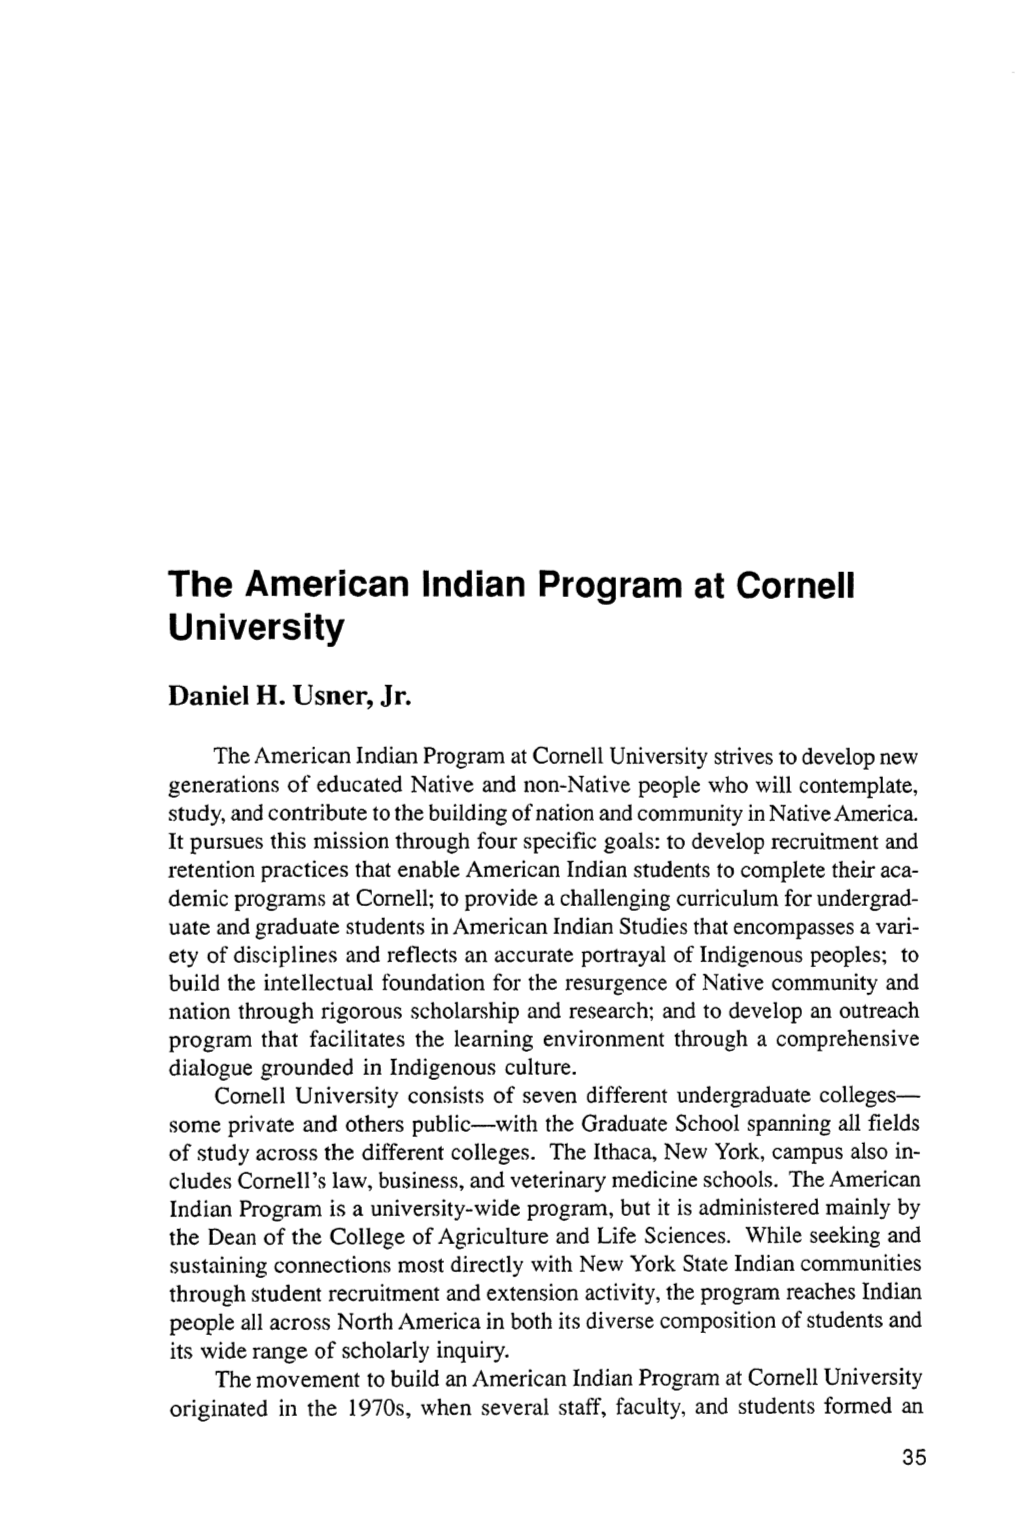 The American Indian Program at Cornell University